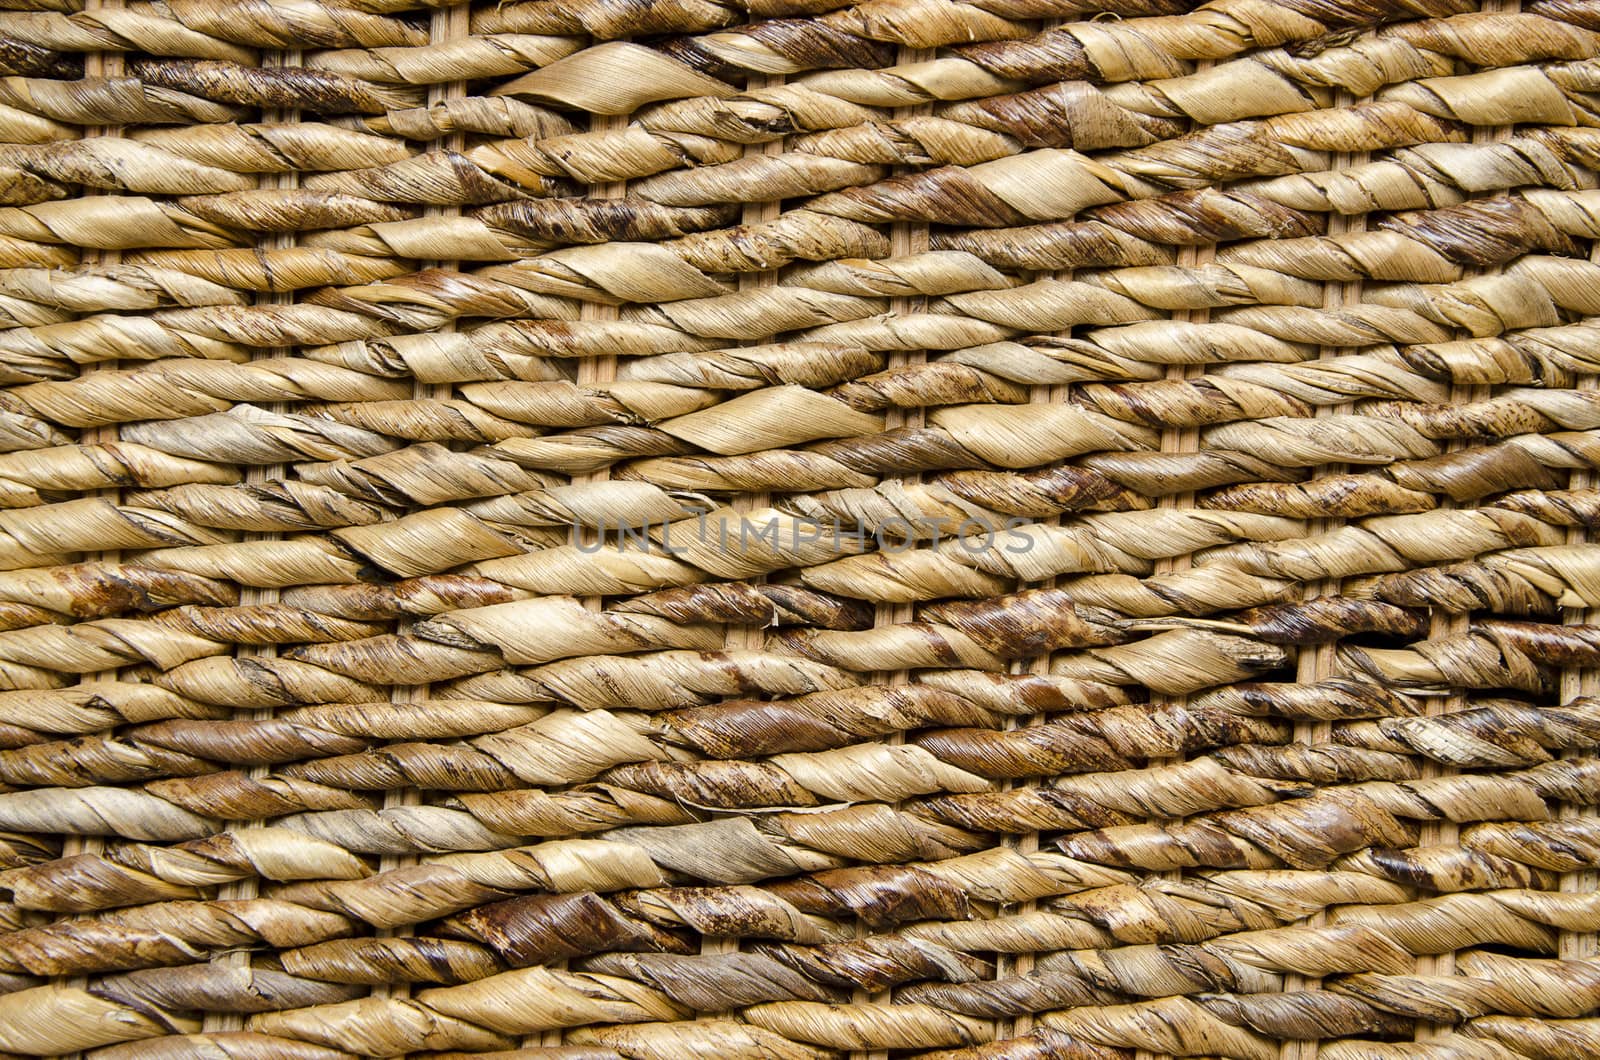 knitted straw textured background by Grufnar